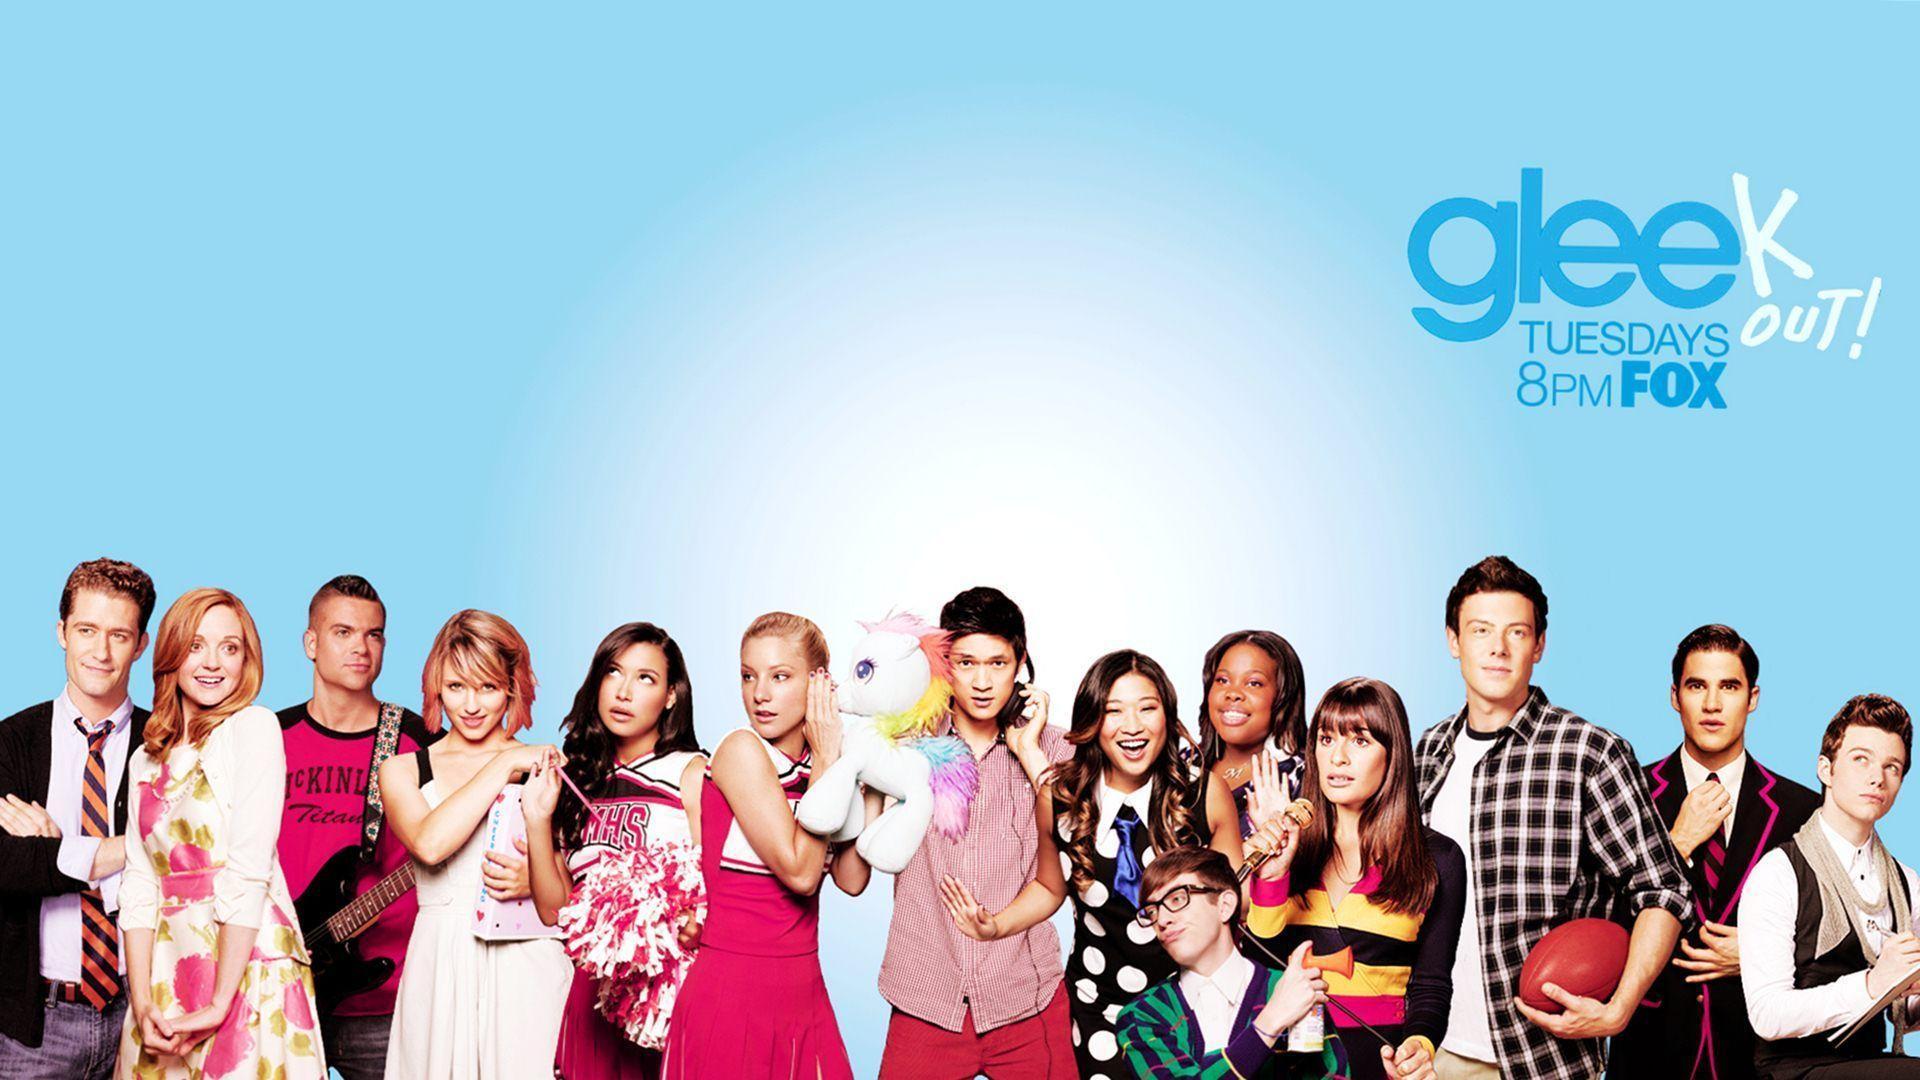 Glee Season 5 Desktop Wallpaper Free Download